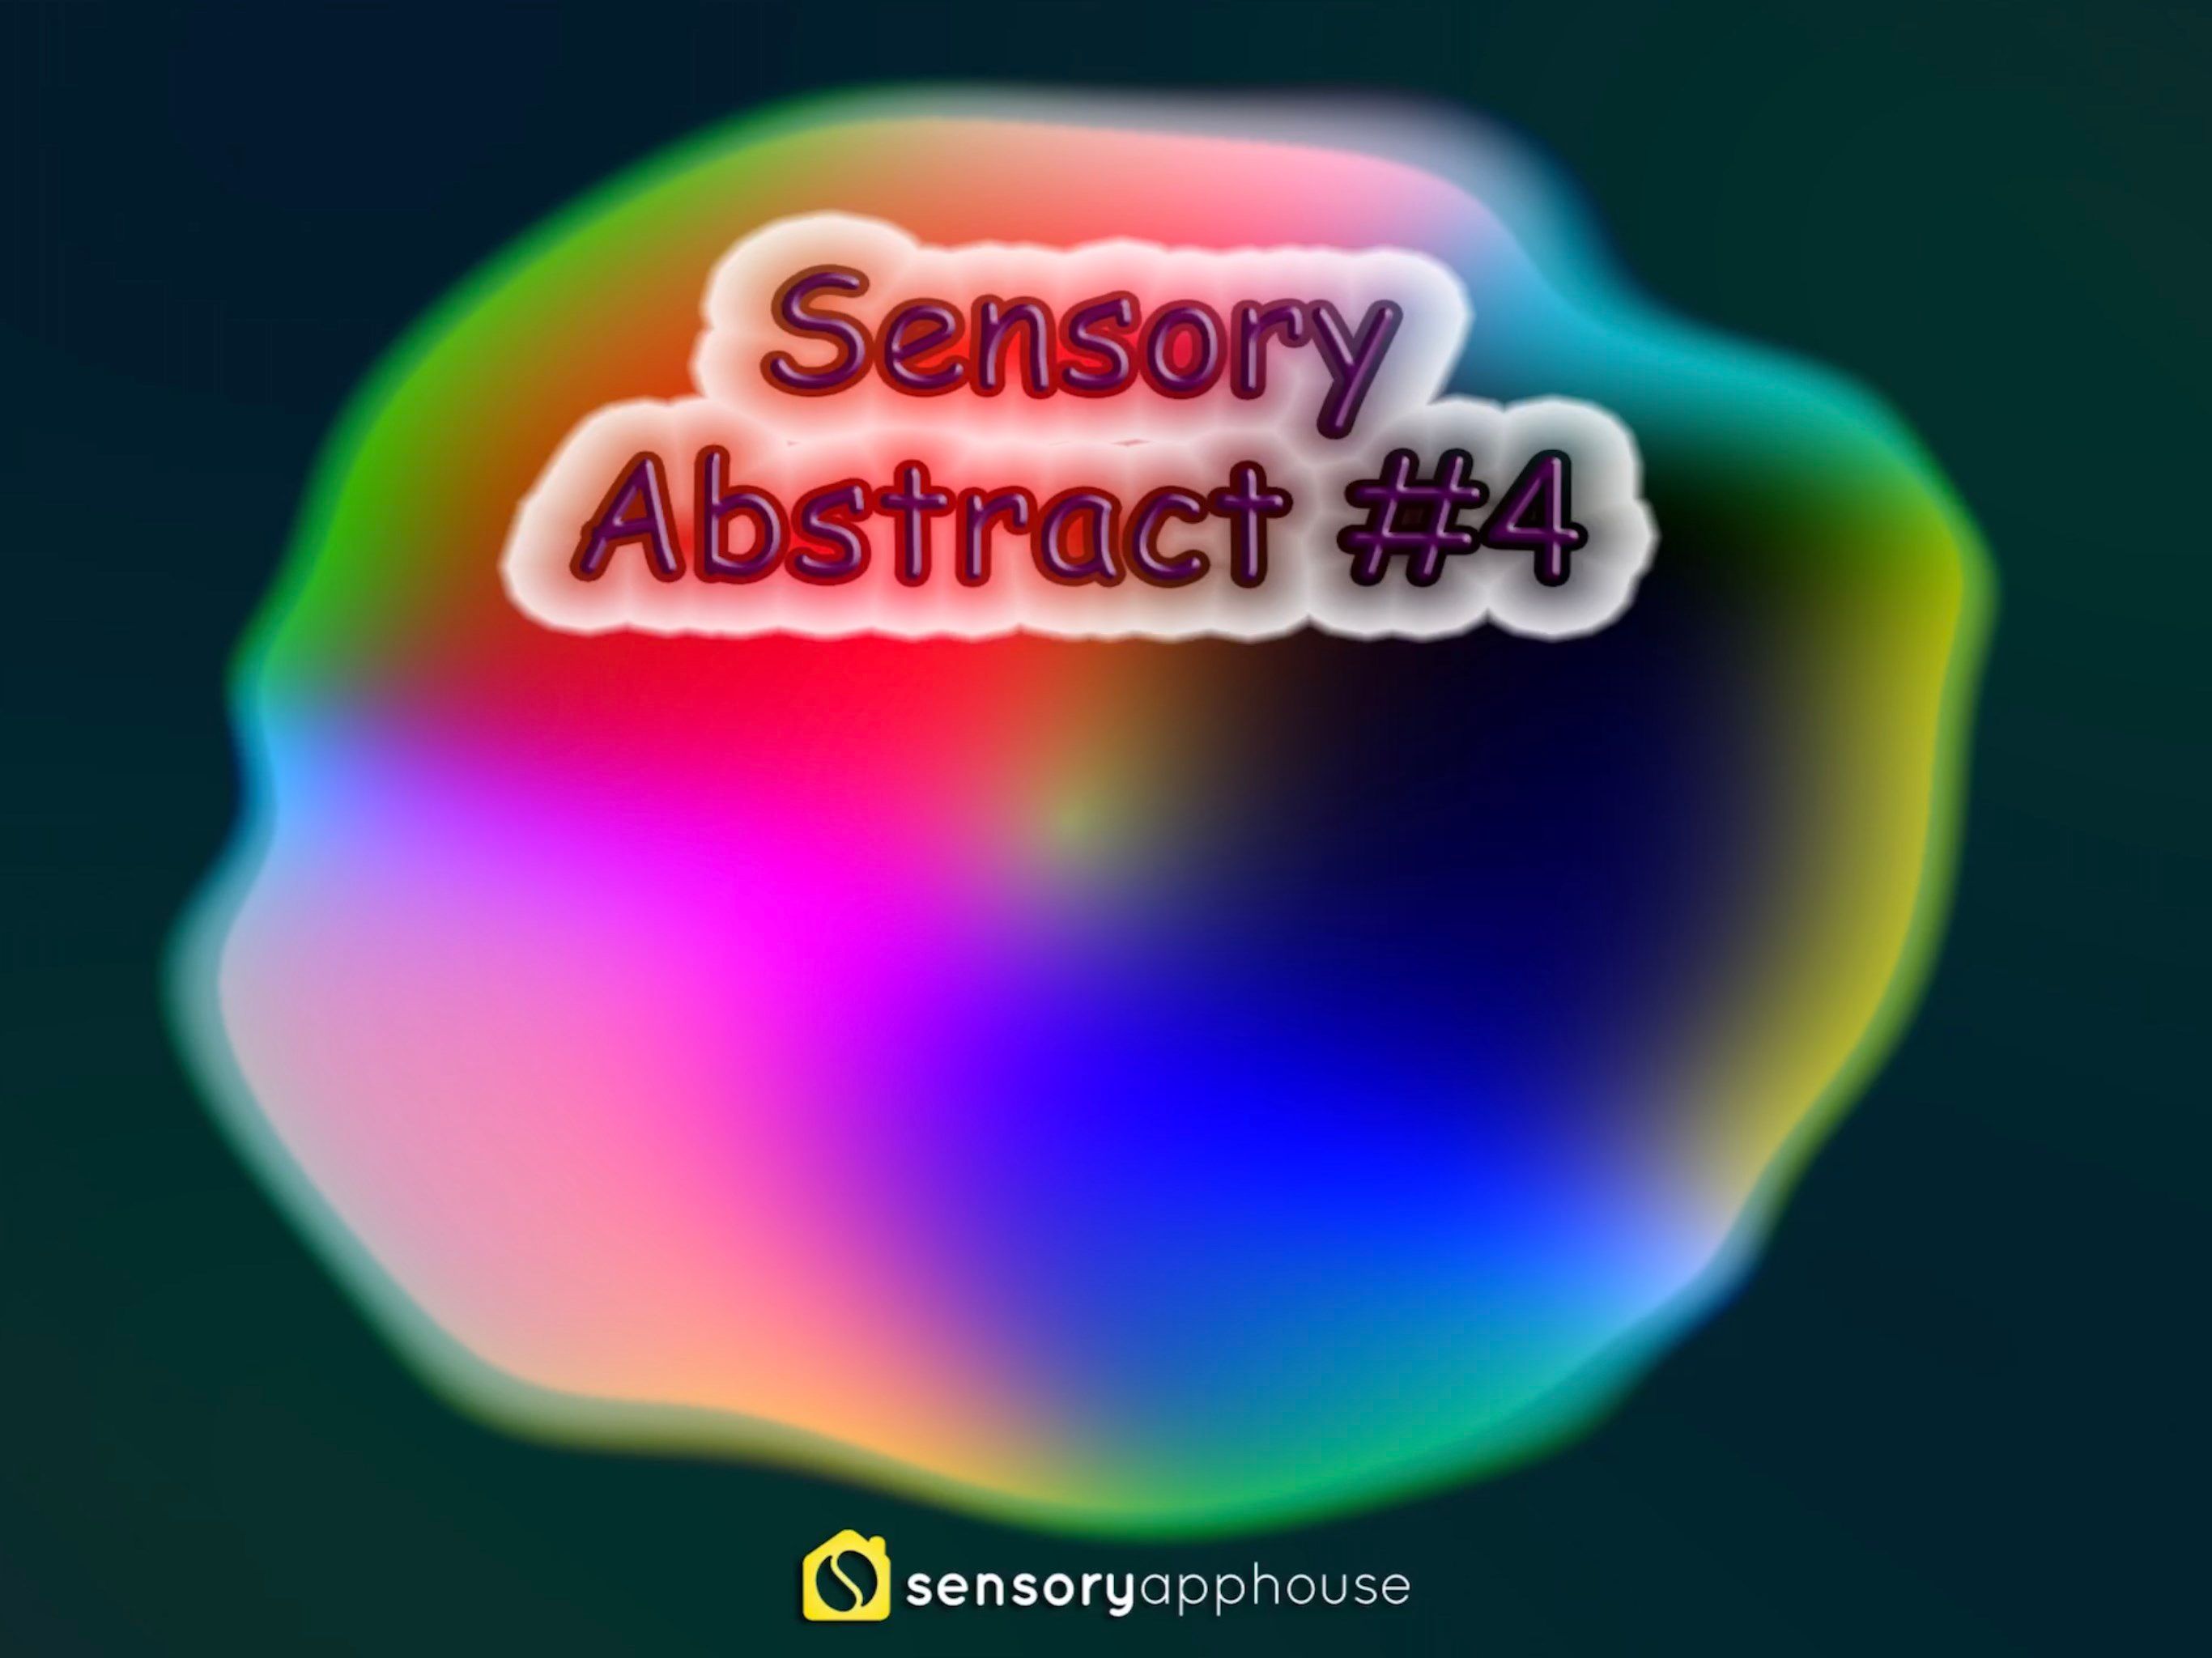 Sensory Abstract #4 View